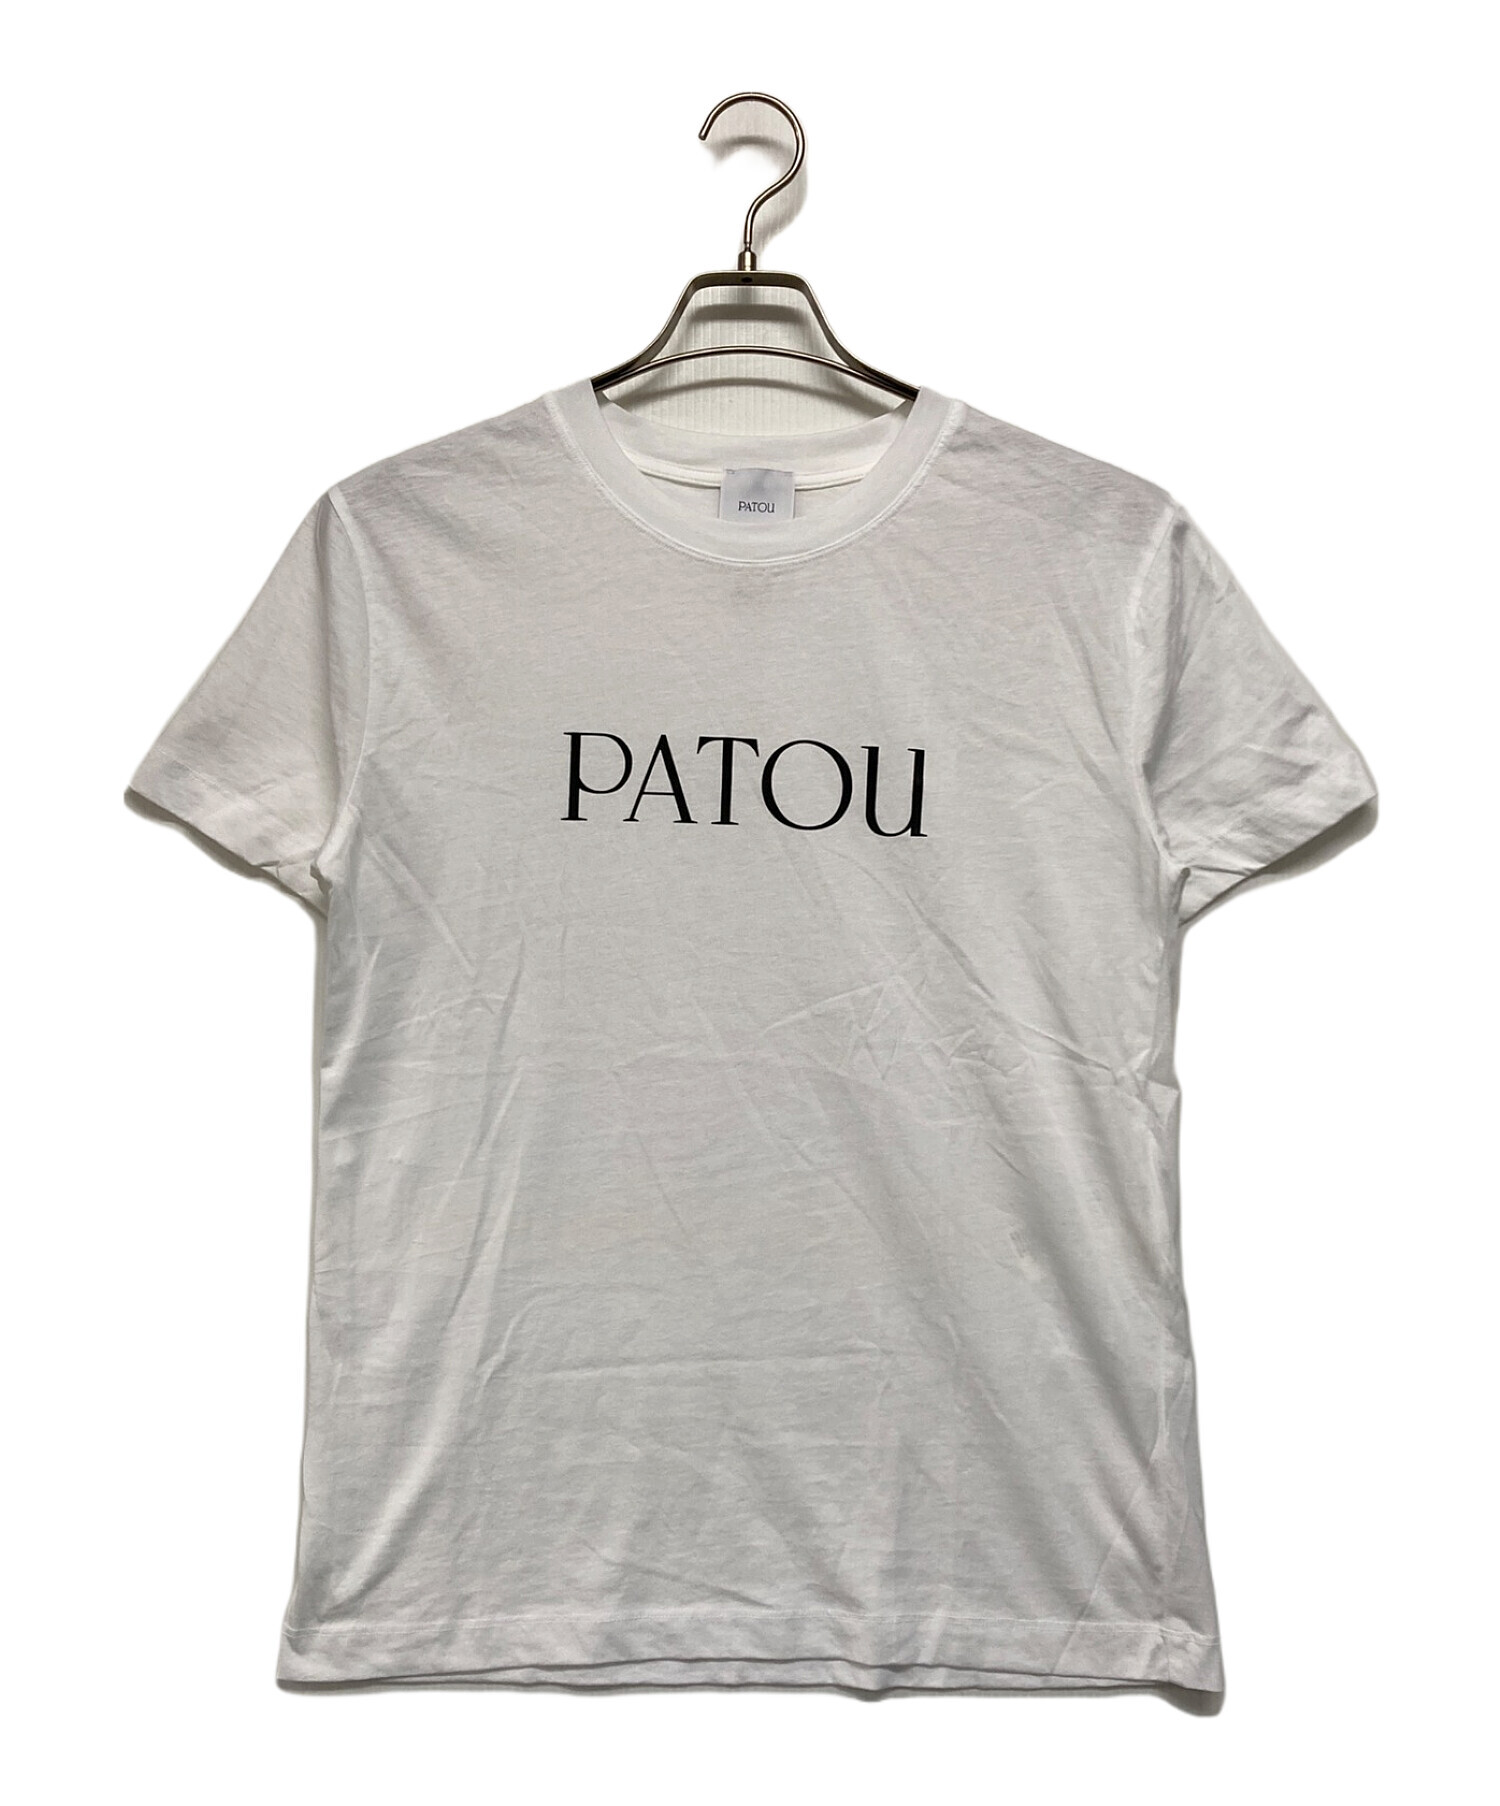 patou (パトゥ) オーガニックコットン パトゥロゴTシャツ ホワイト サイズ:SIZE S